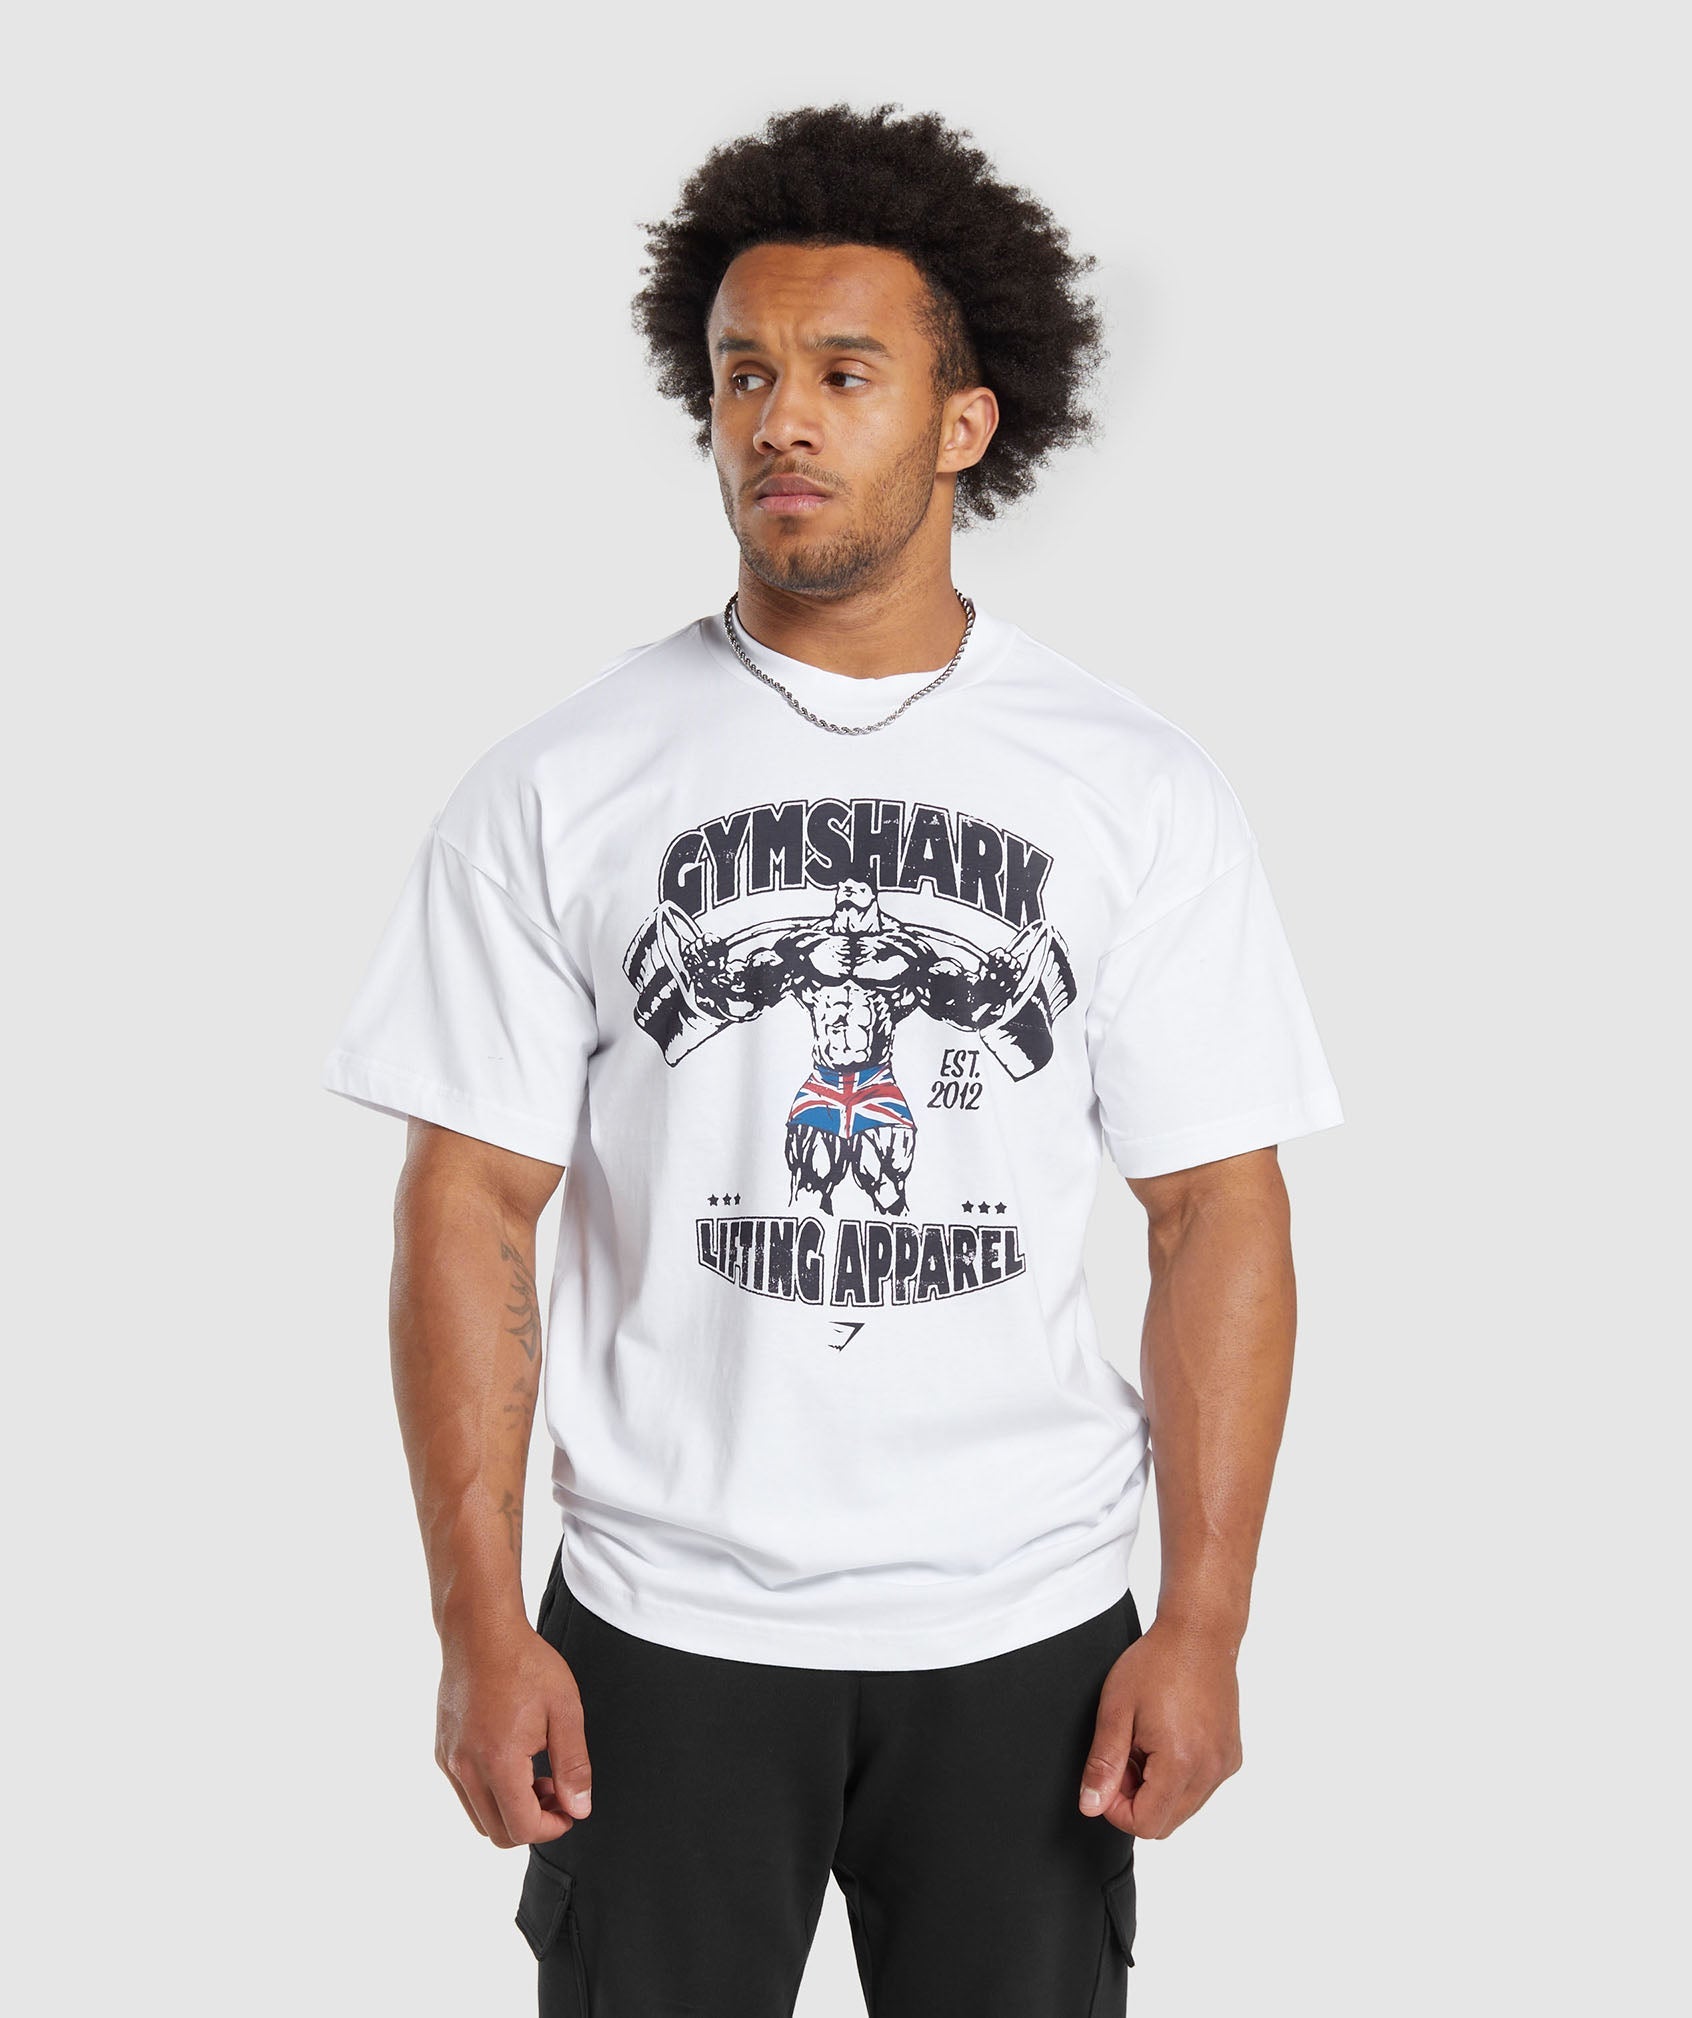 Gymshark Lifting Apparel T-Shirt - White